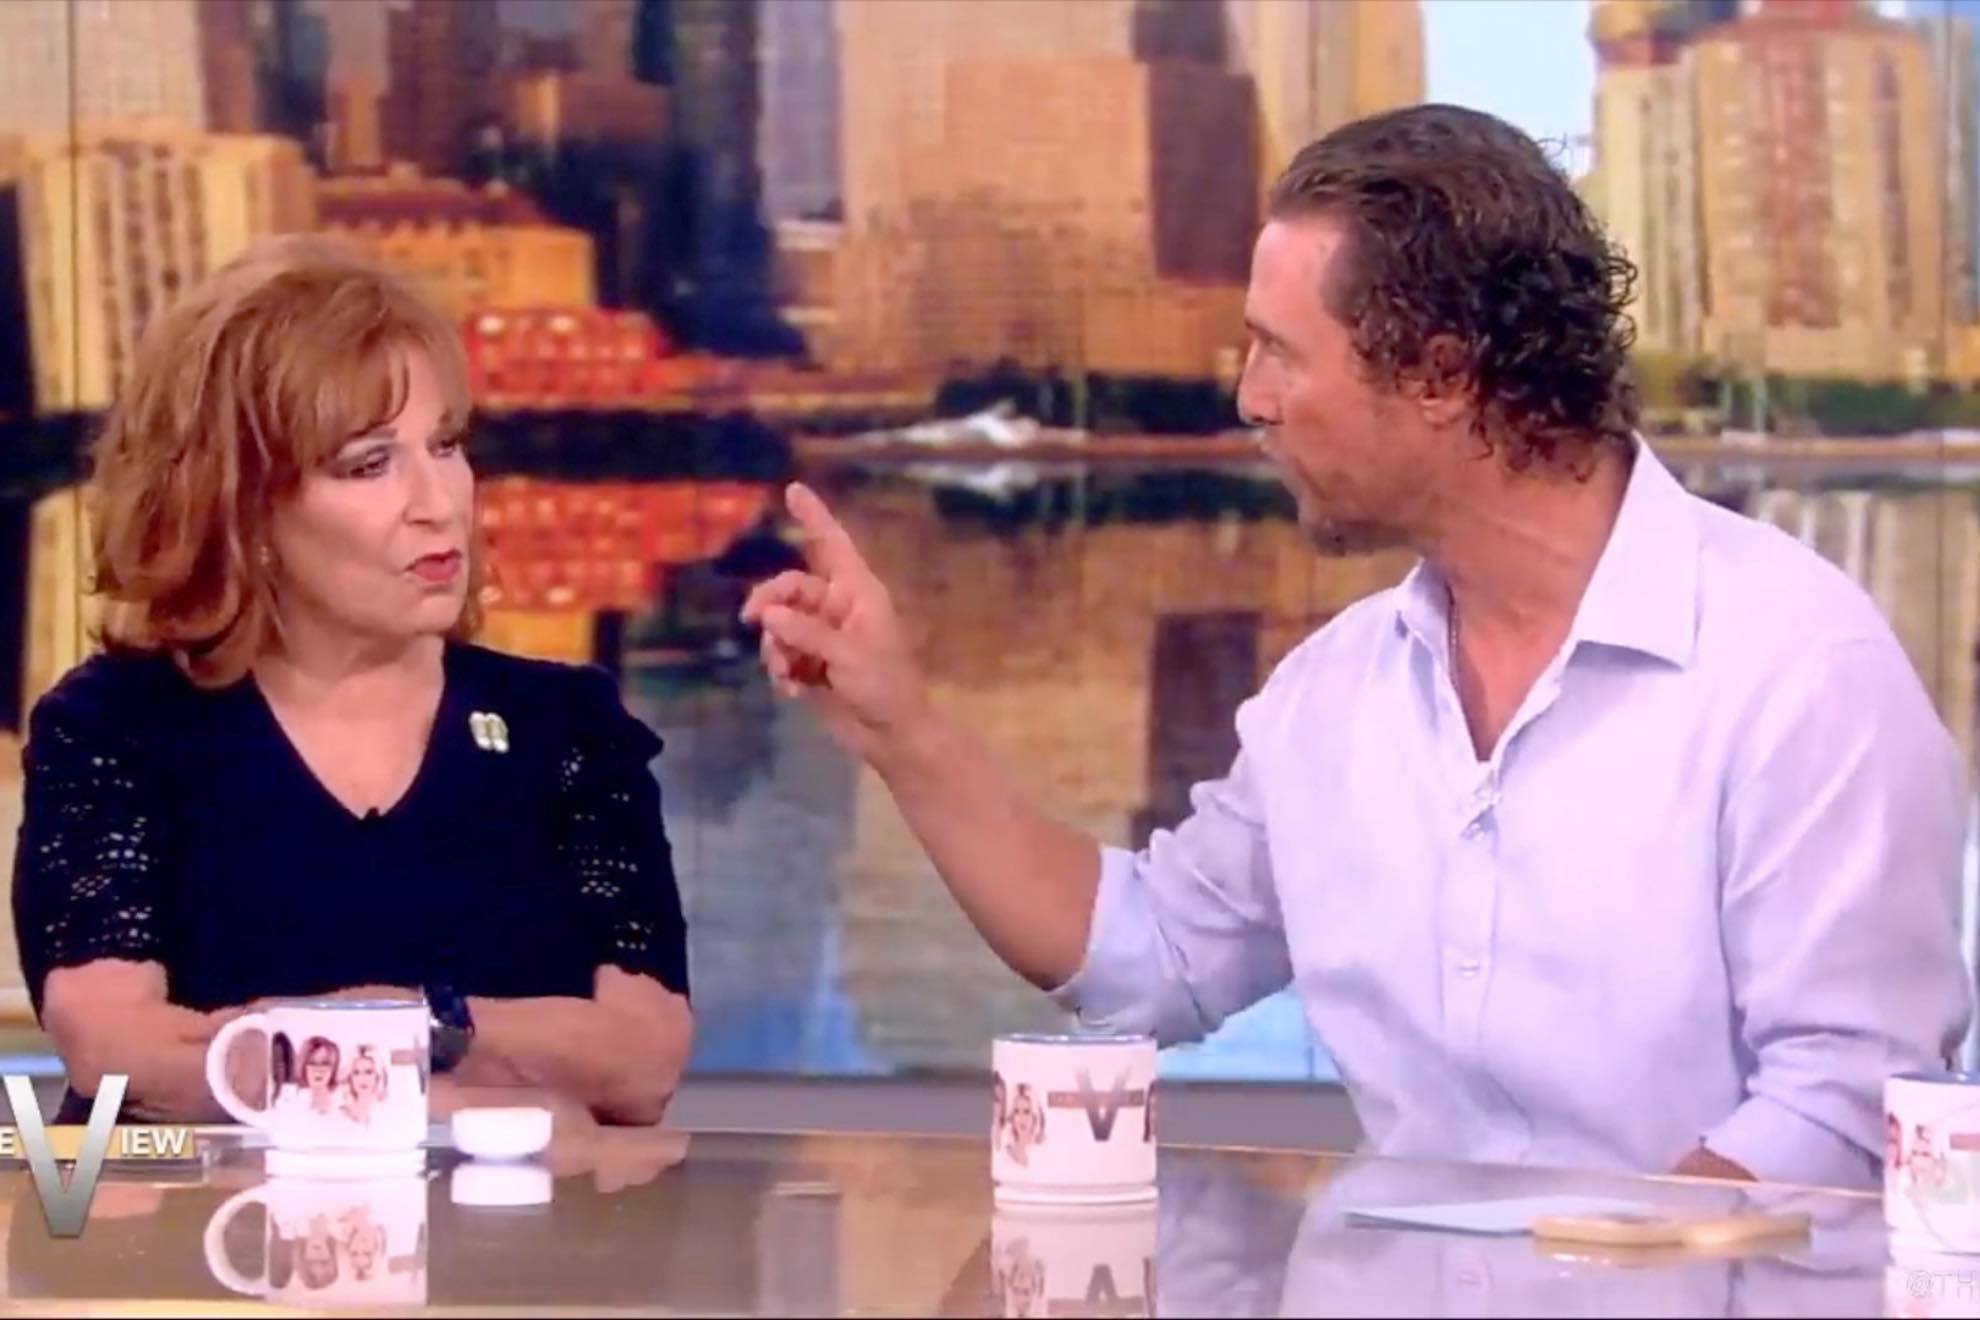 Matthew McConaughey points at The View host Joy Behar